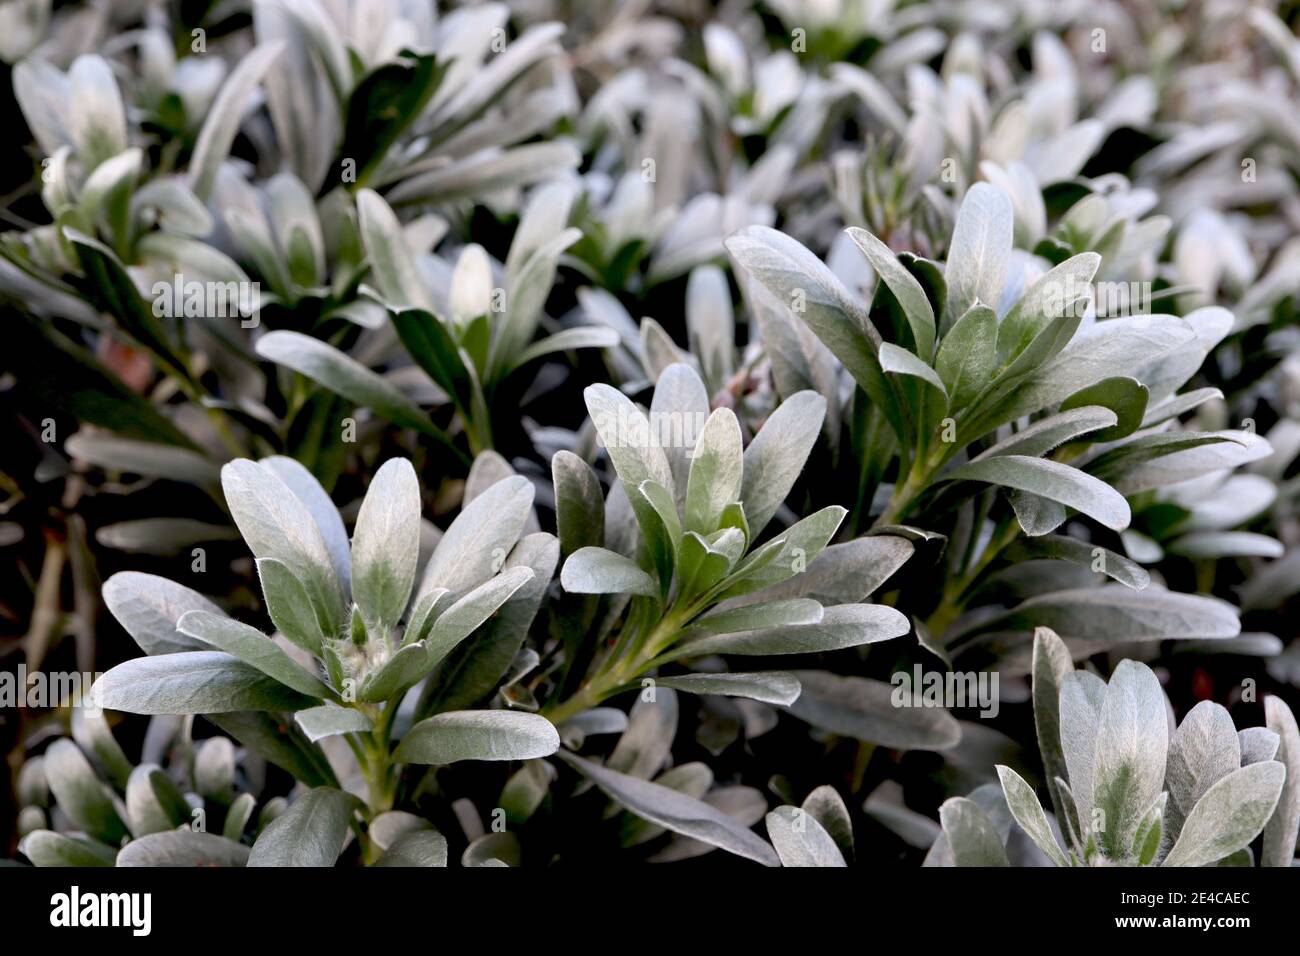 Convolvulus cineorum Silverbush – brillantes hojas grises plateadas, enero, Inglaterra, Reino Unido Foto de stock